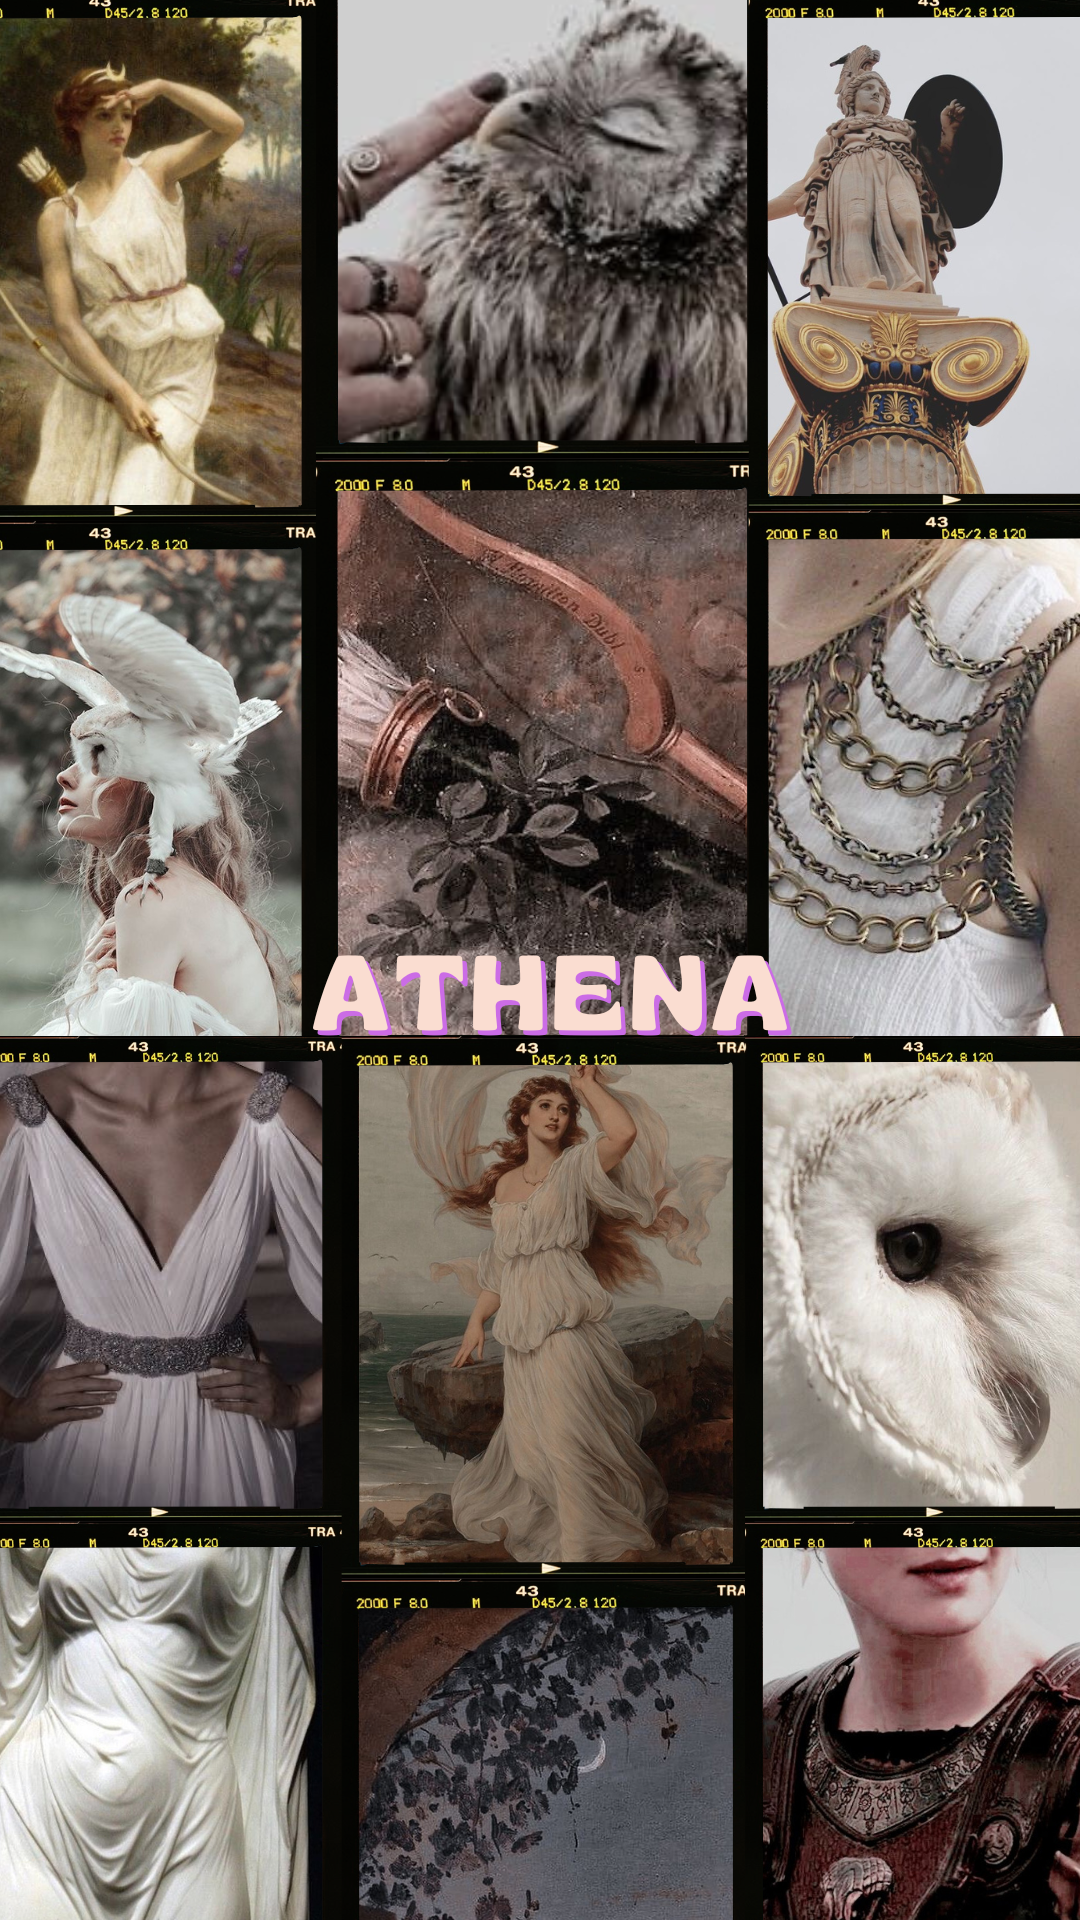 Owl of Athena Necklace